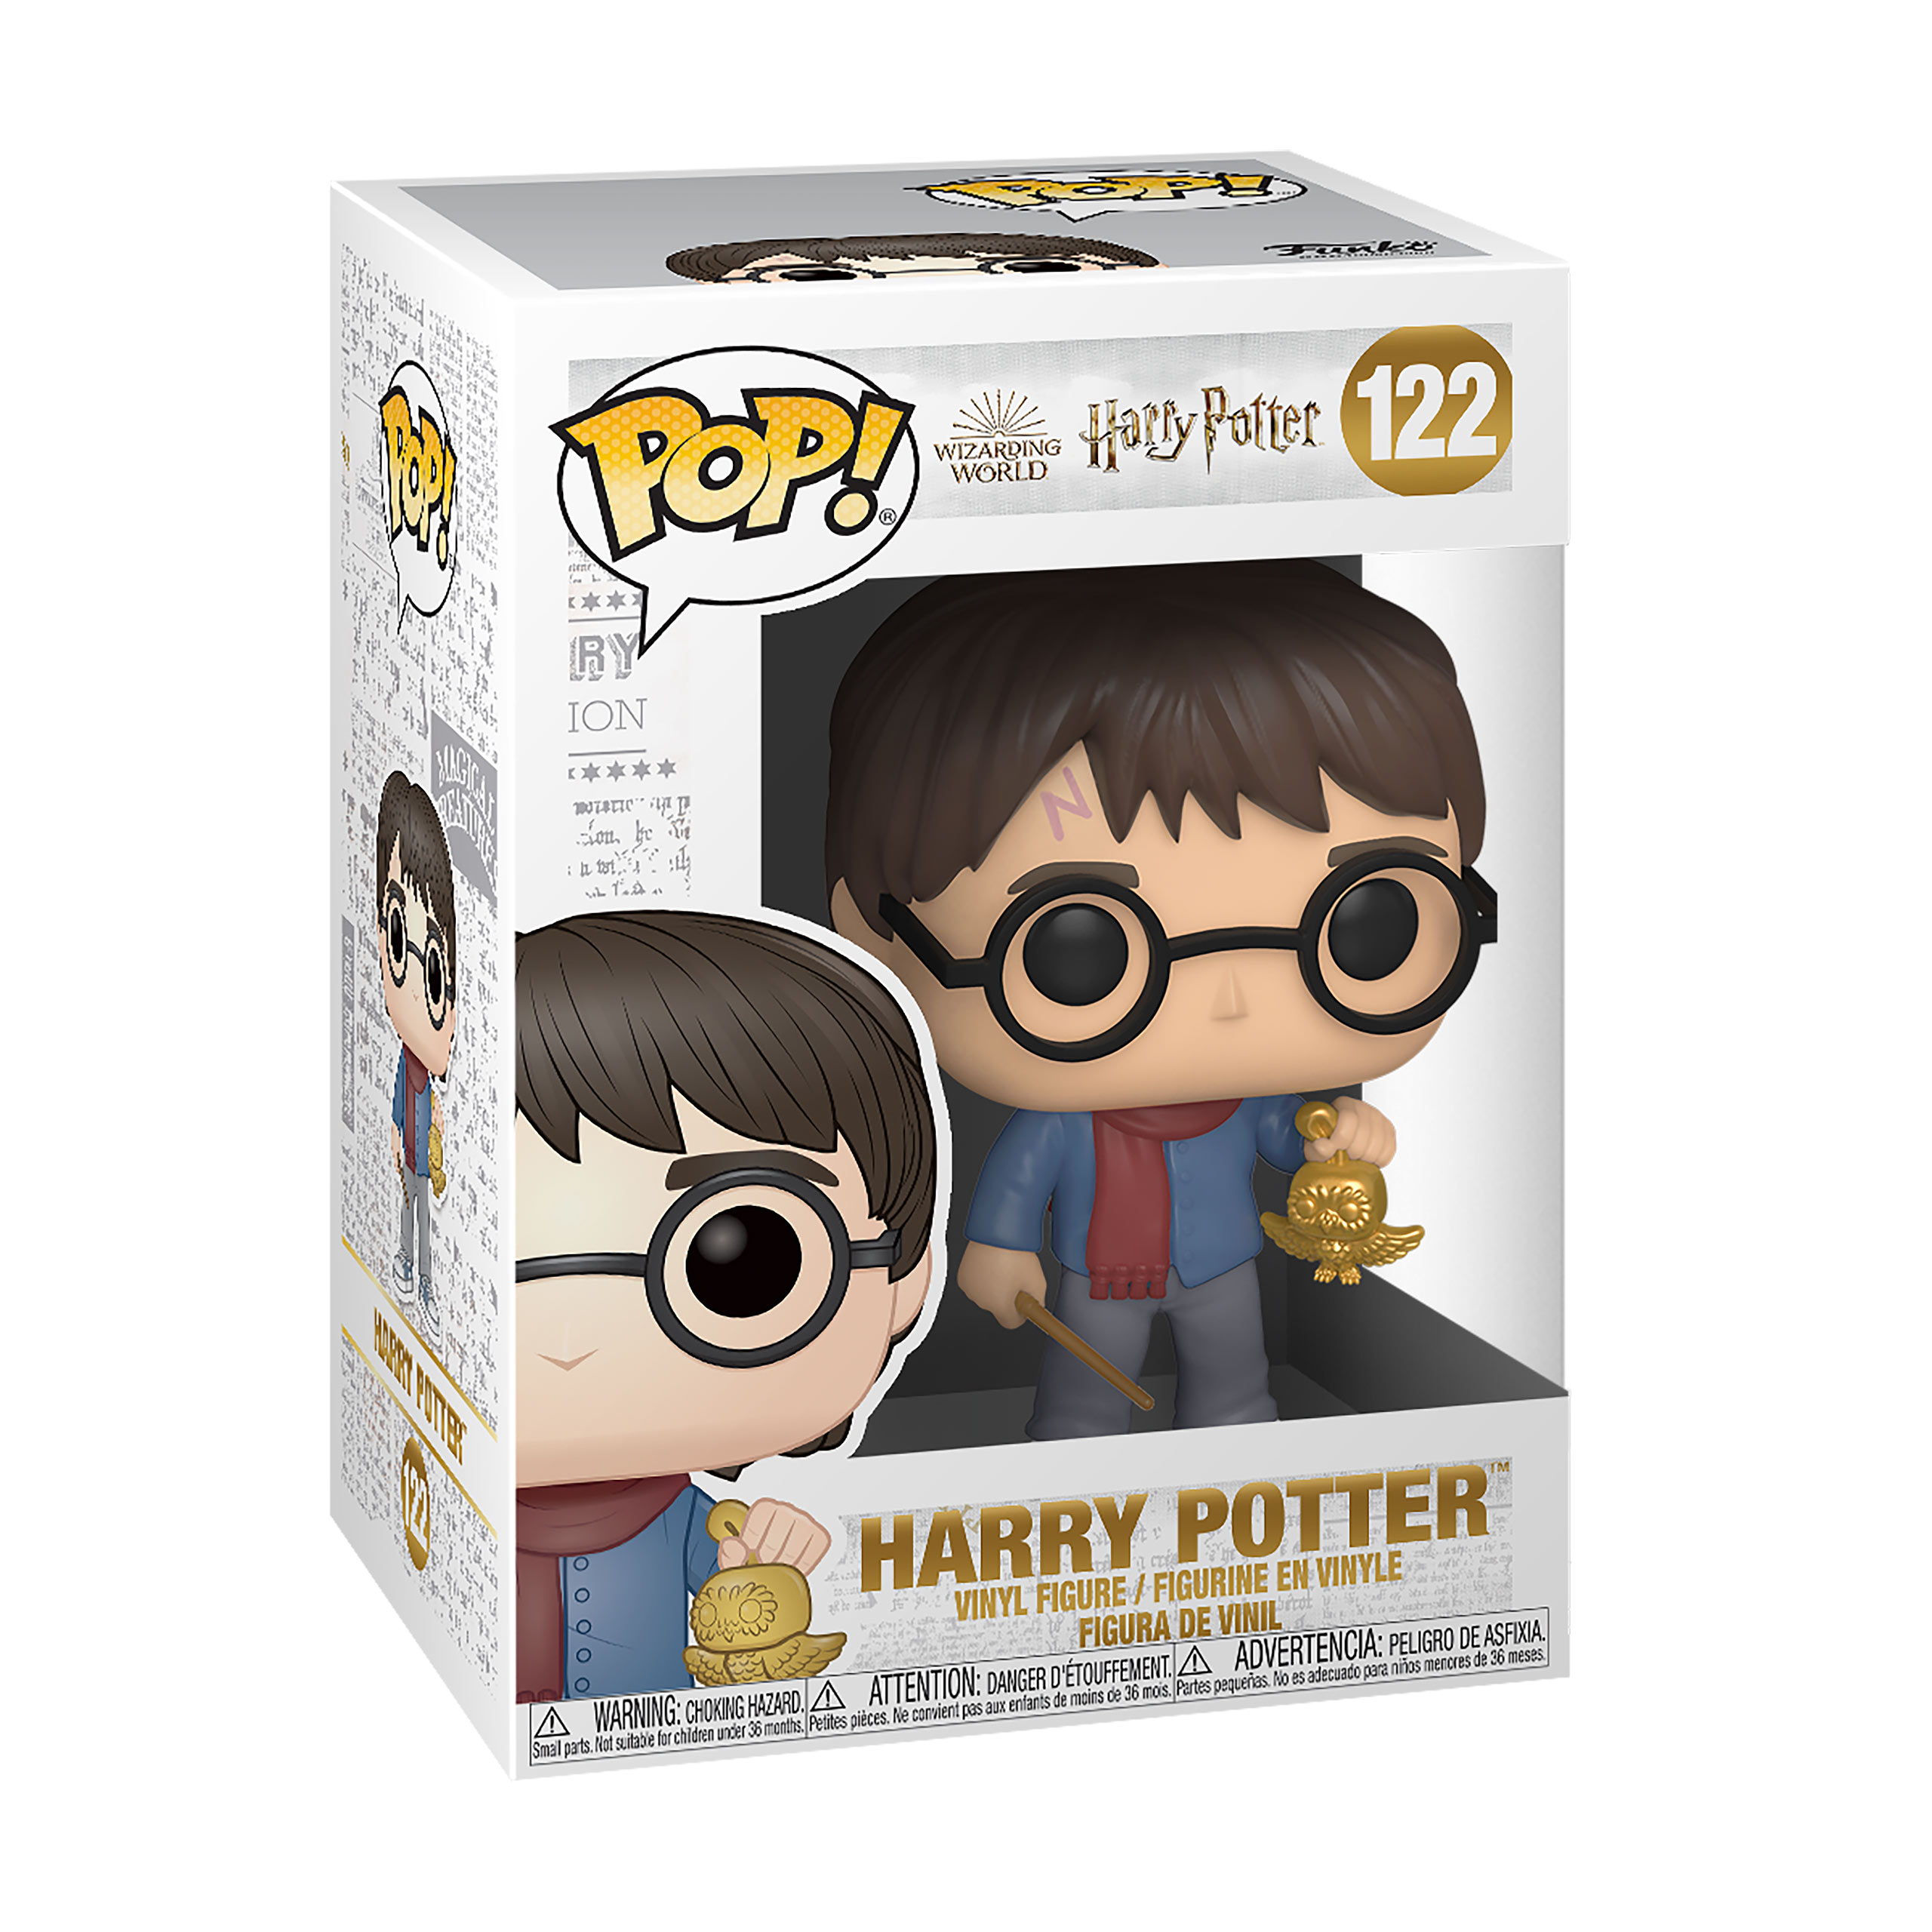 Harry Potter Holiday Funko Pop figure